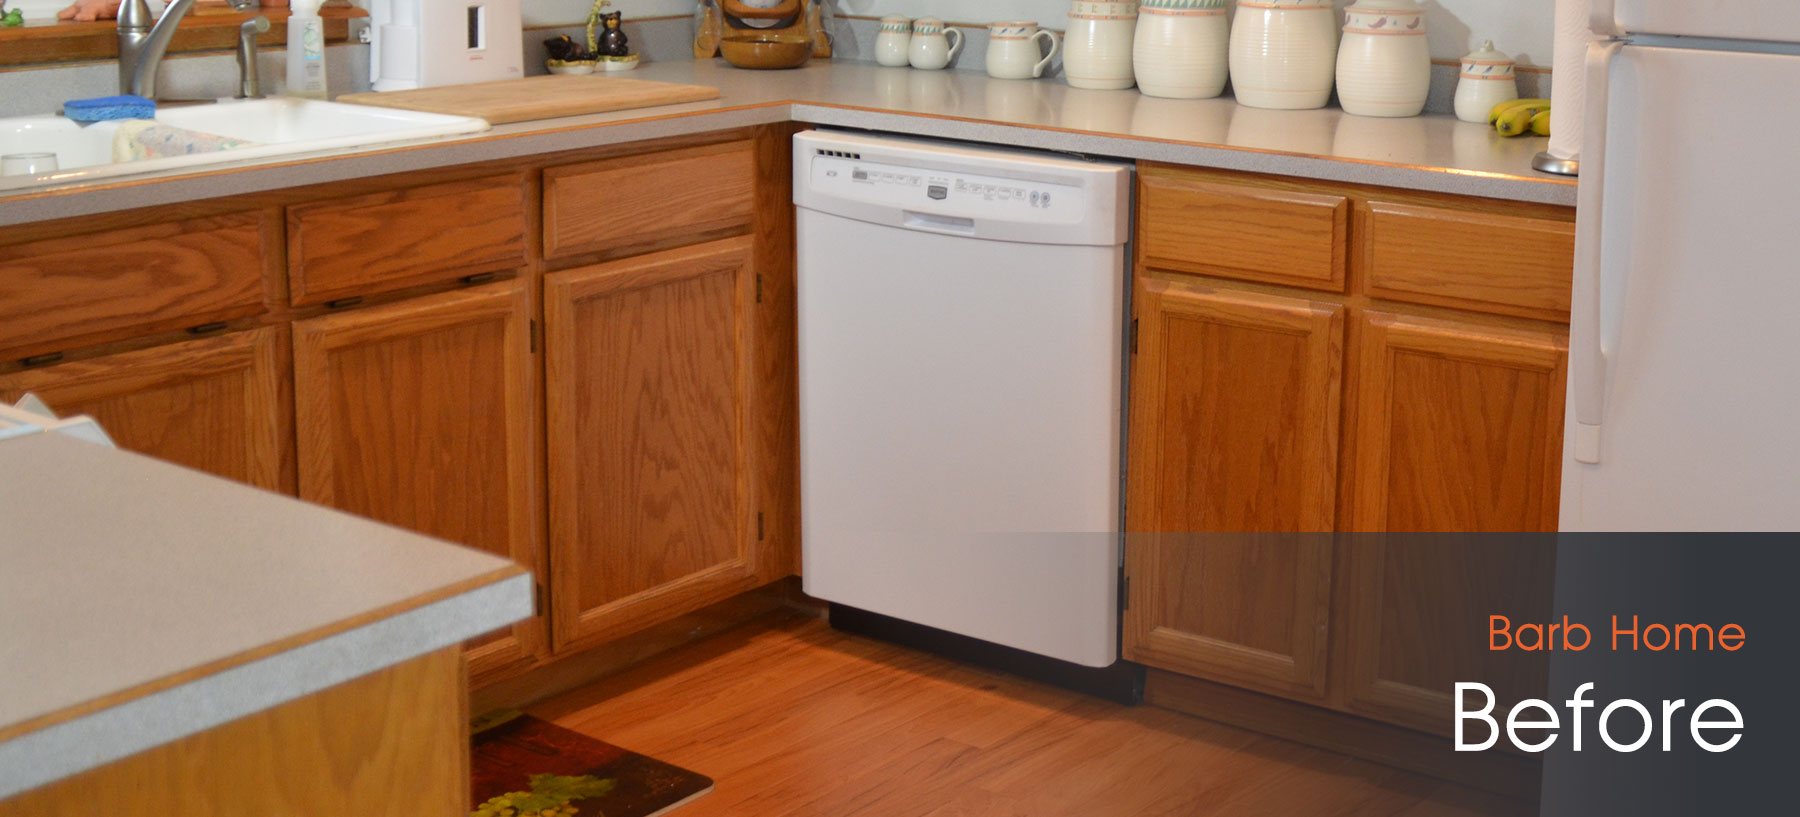 Cabinet Refacing Elk Grove Ca 95624 Valley Oak Home Appliance